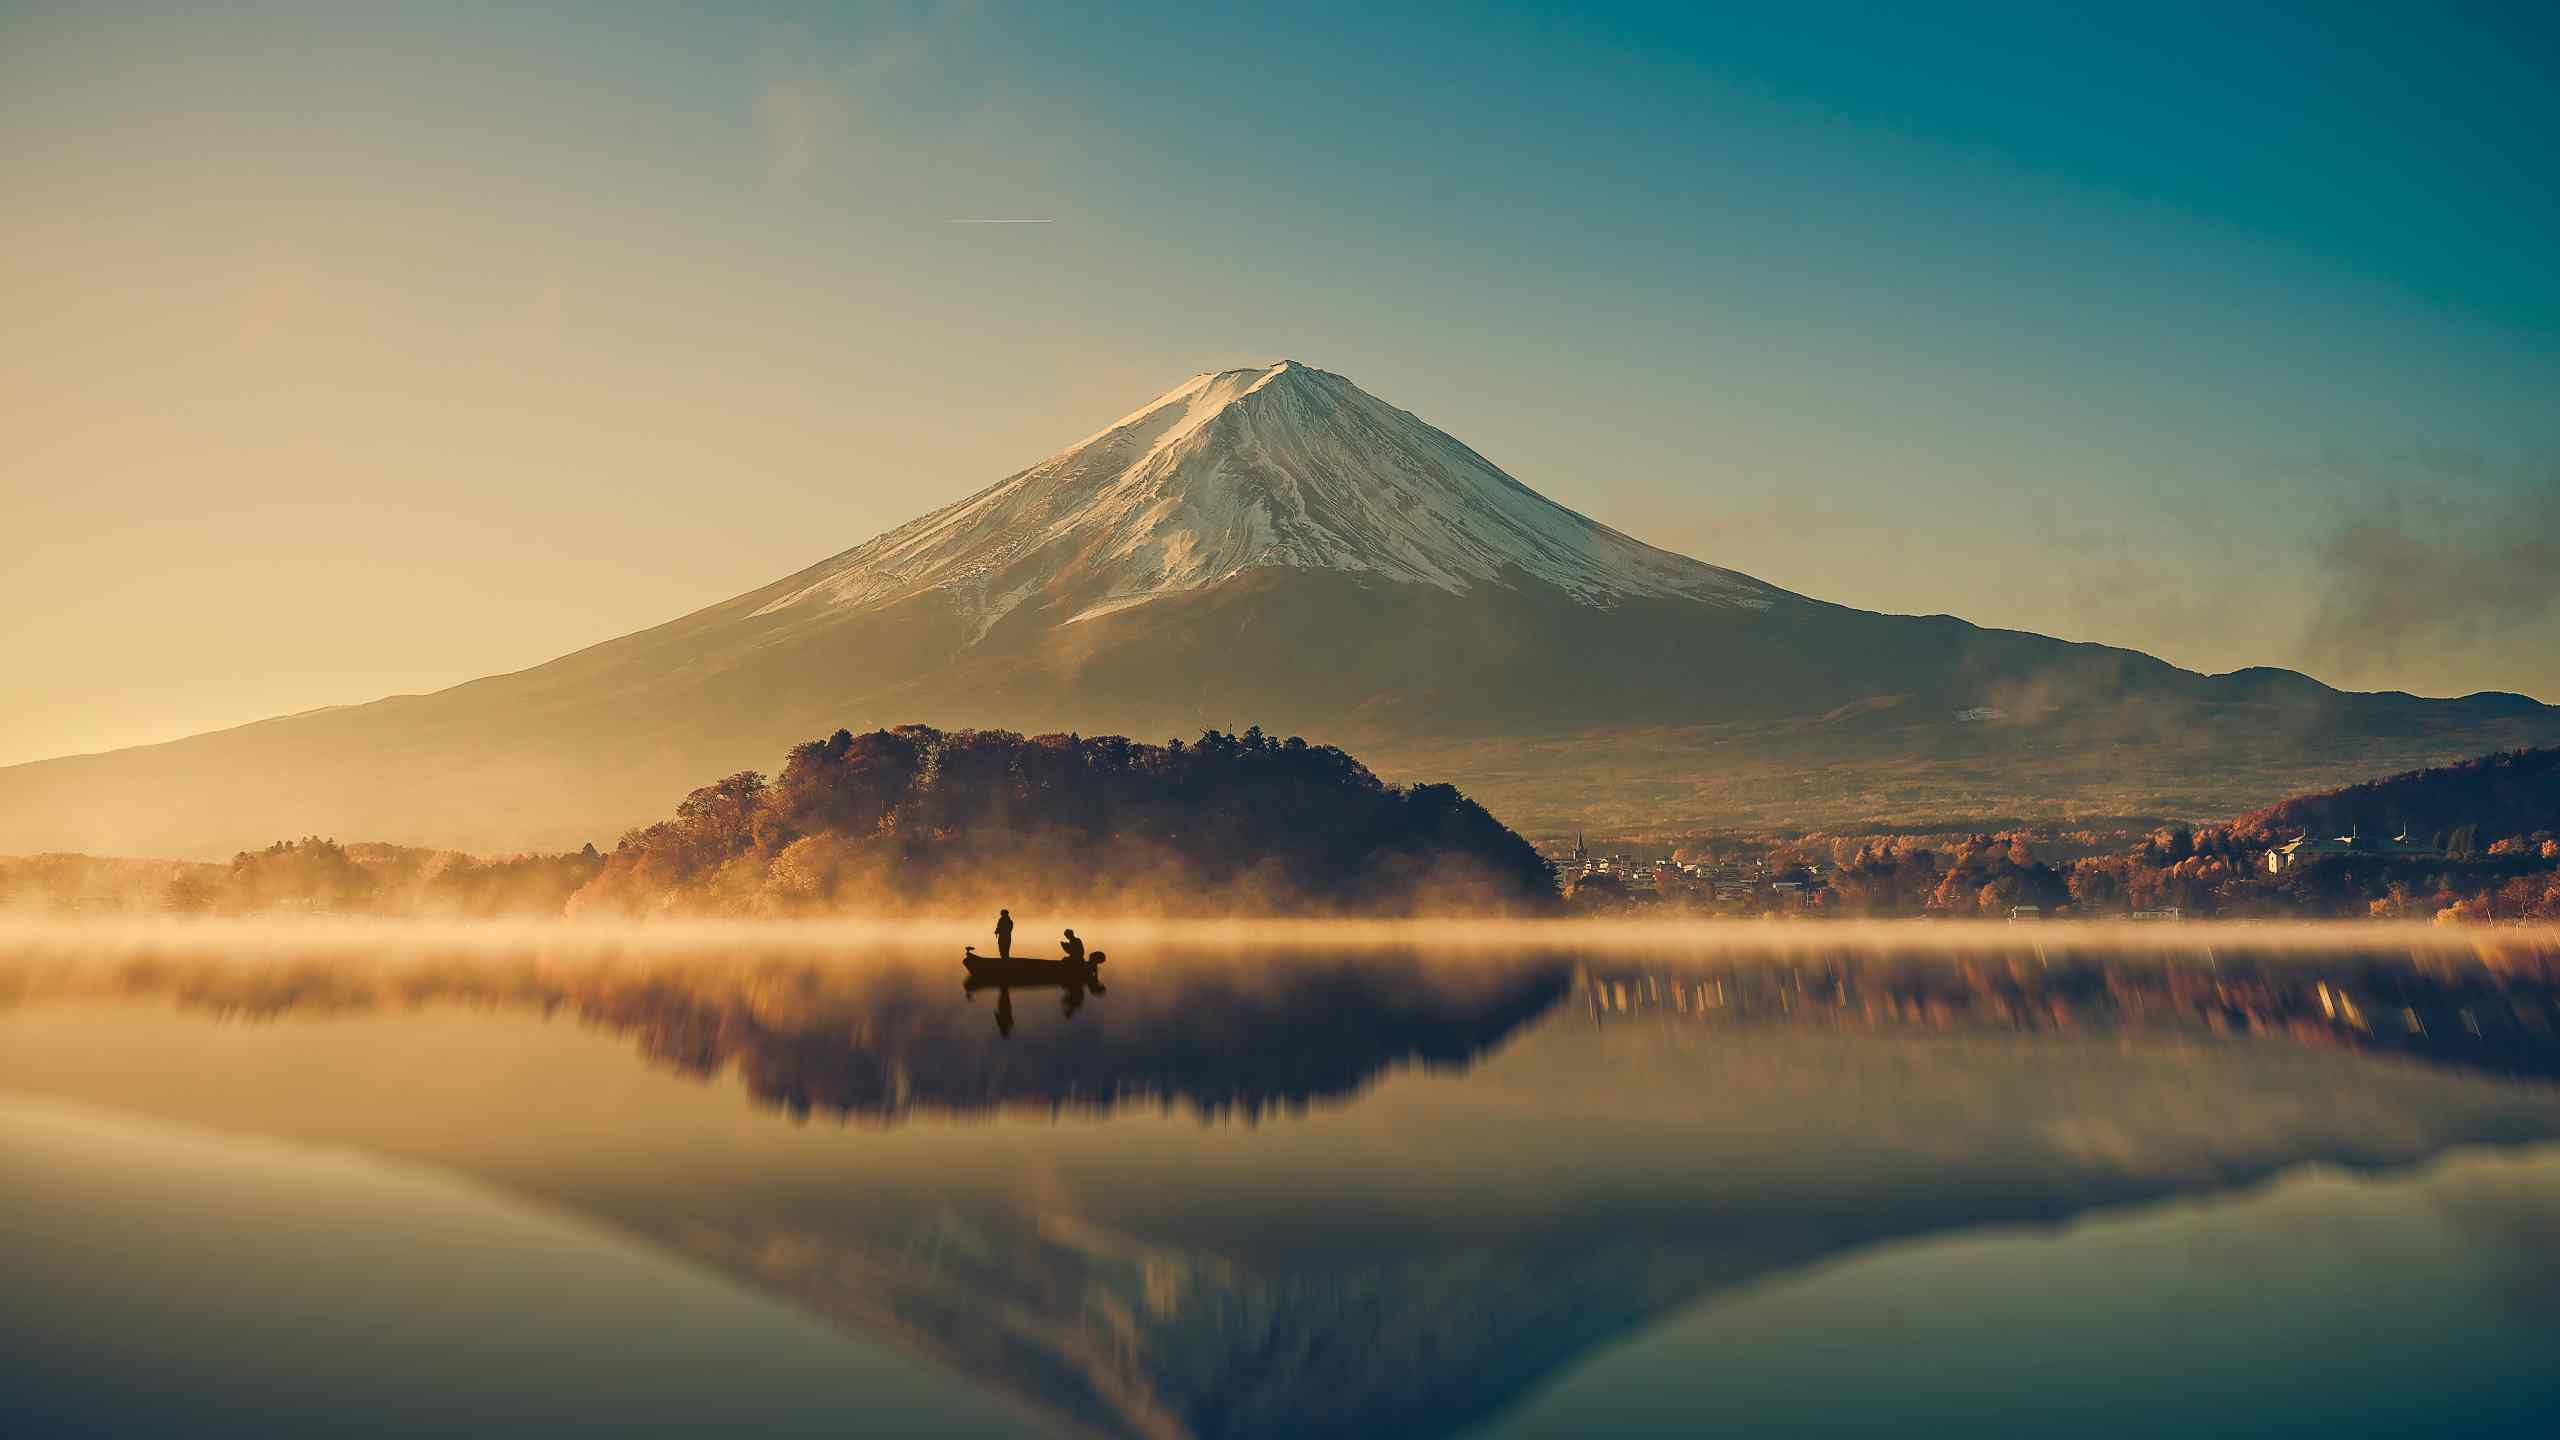 Mount Fuji Japan